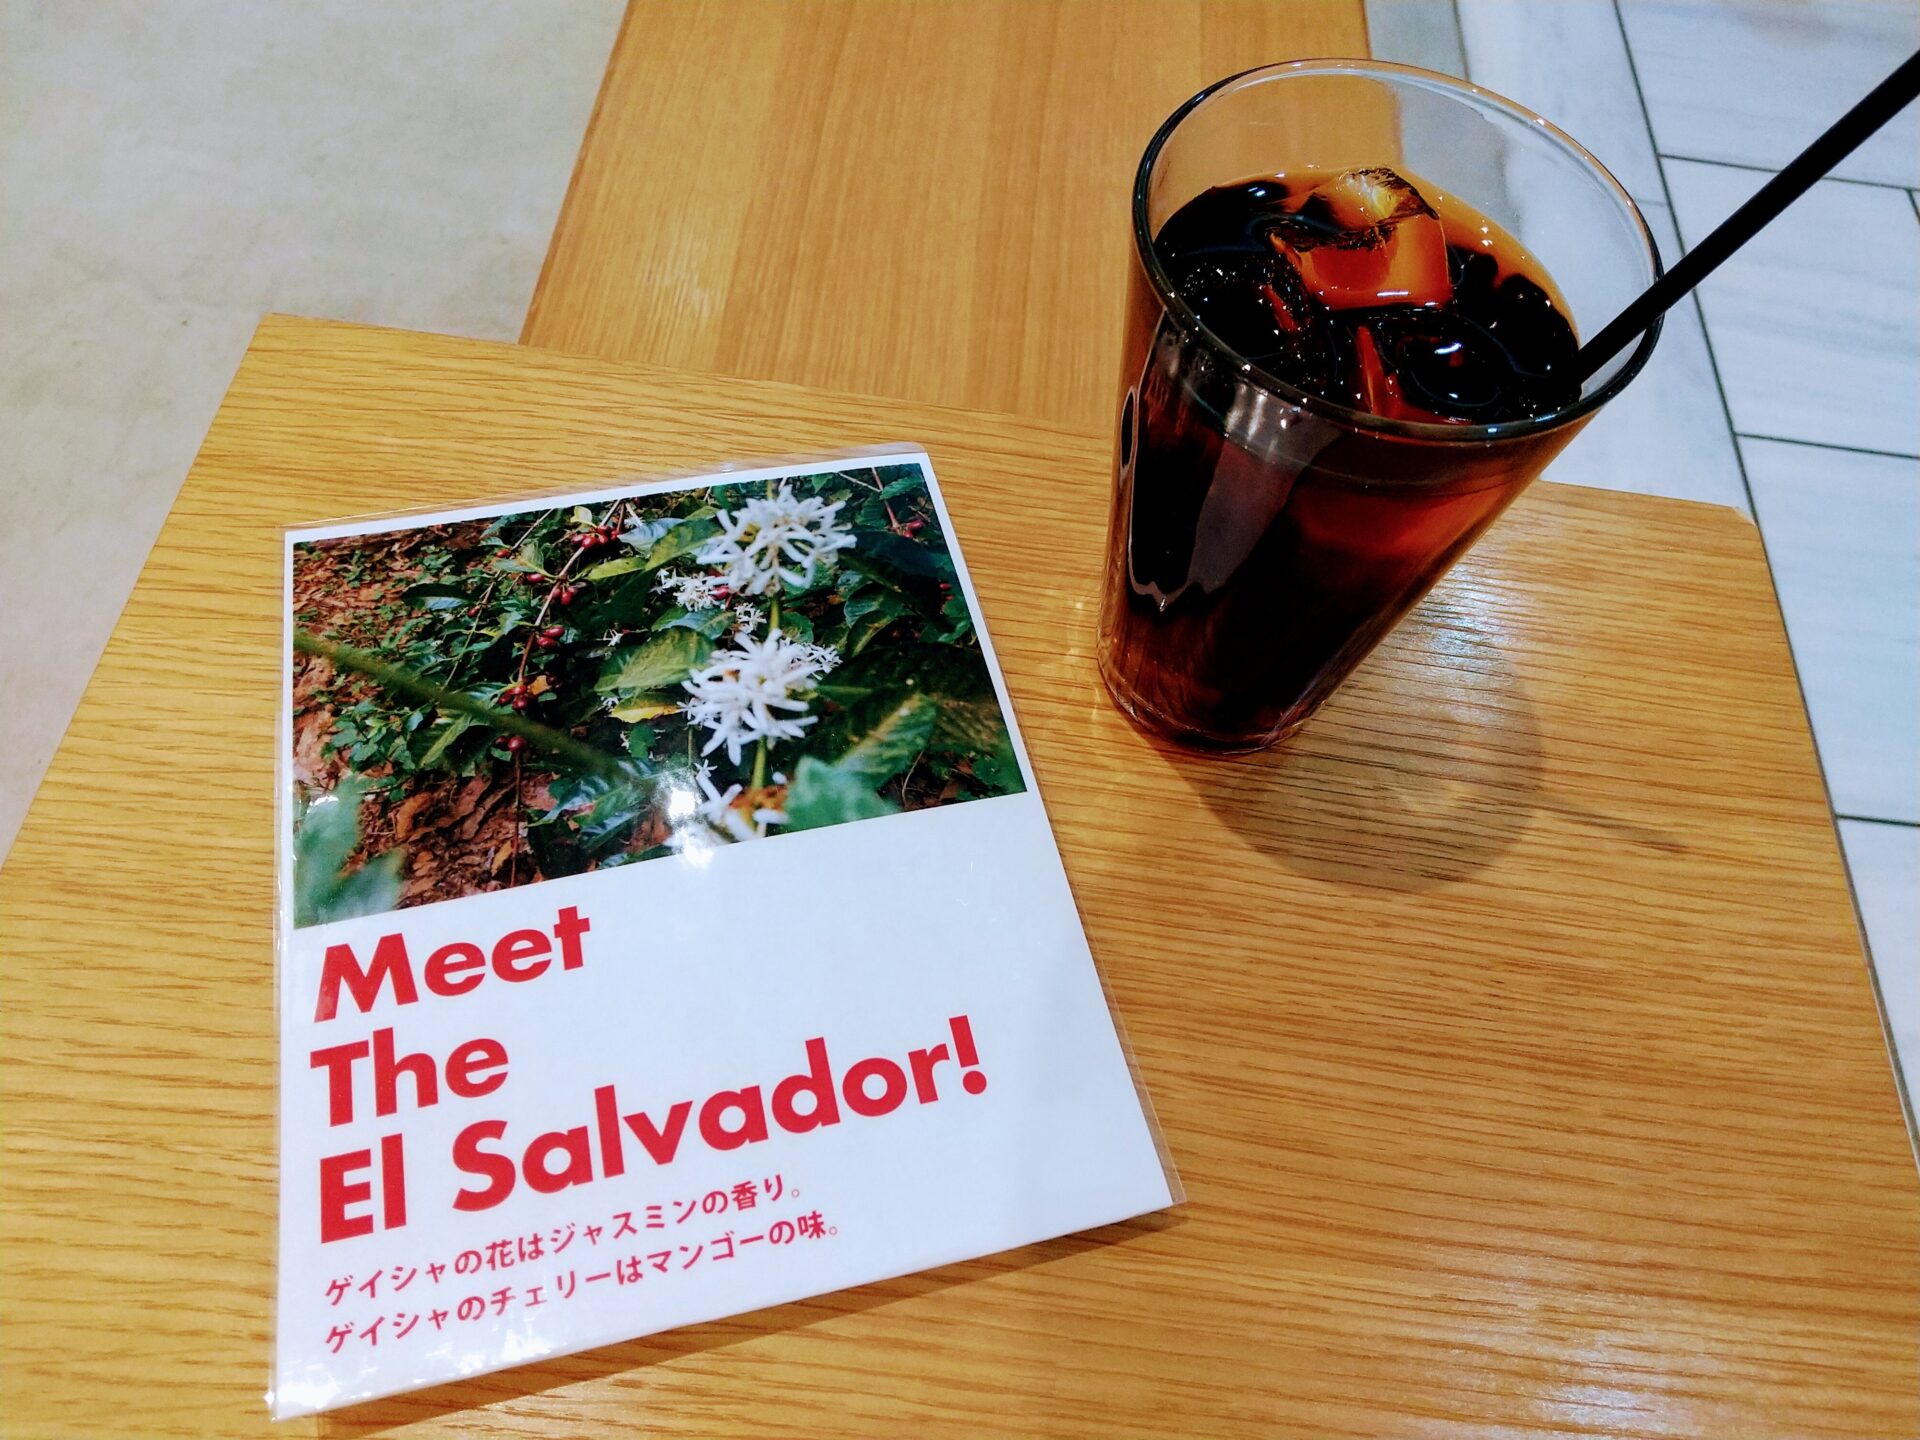 Meet the El Salvador”の甘い余韻